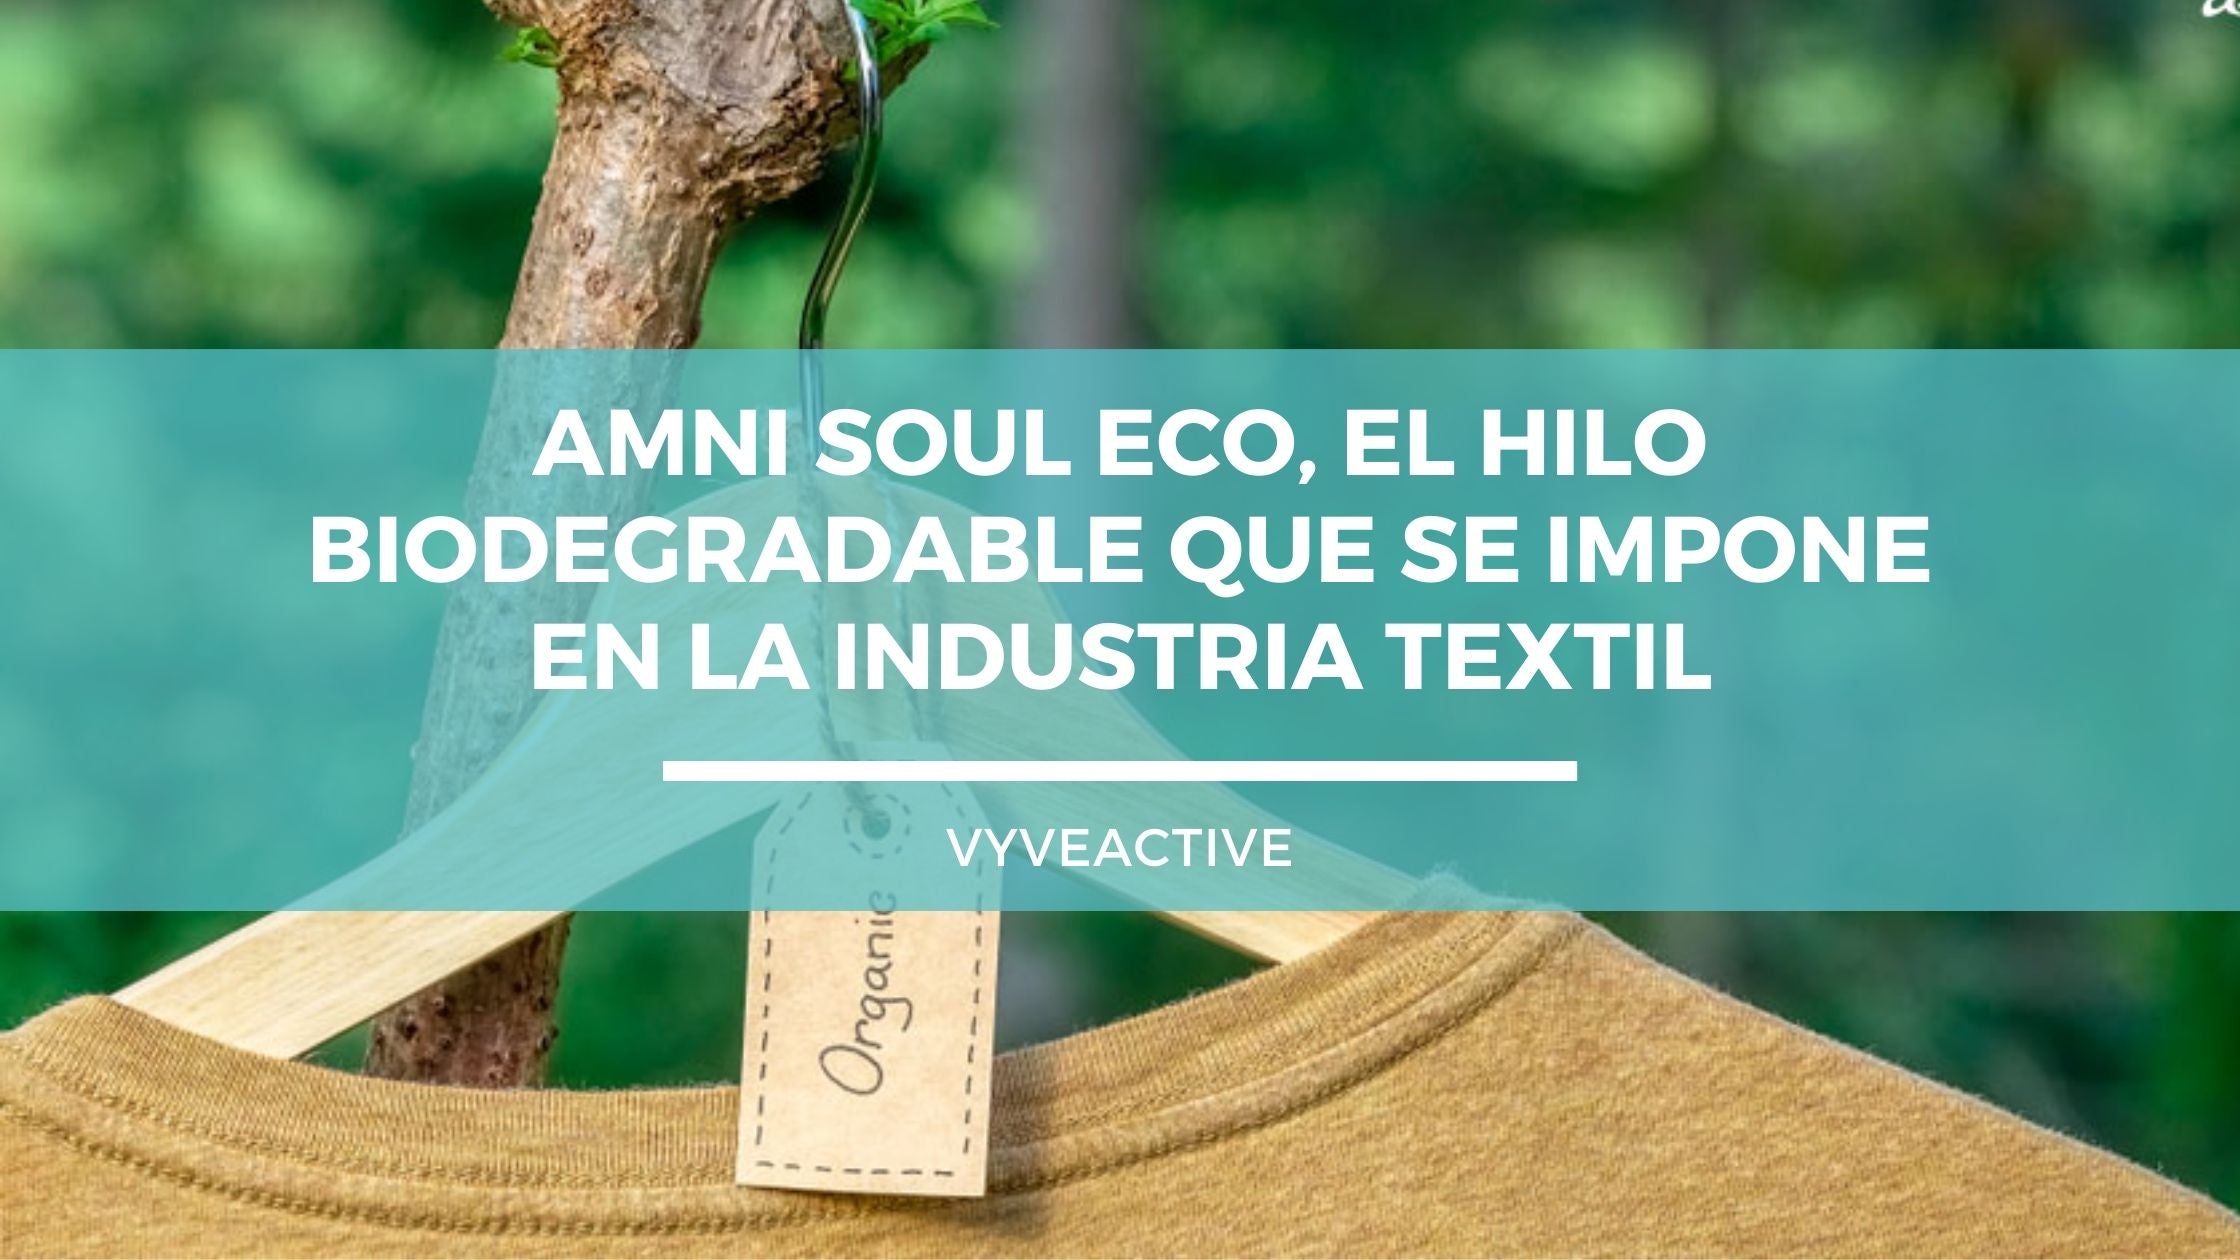 Amni Soul Eco, el hilo biodegradable que se impone en la industria textil